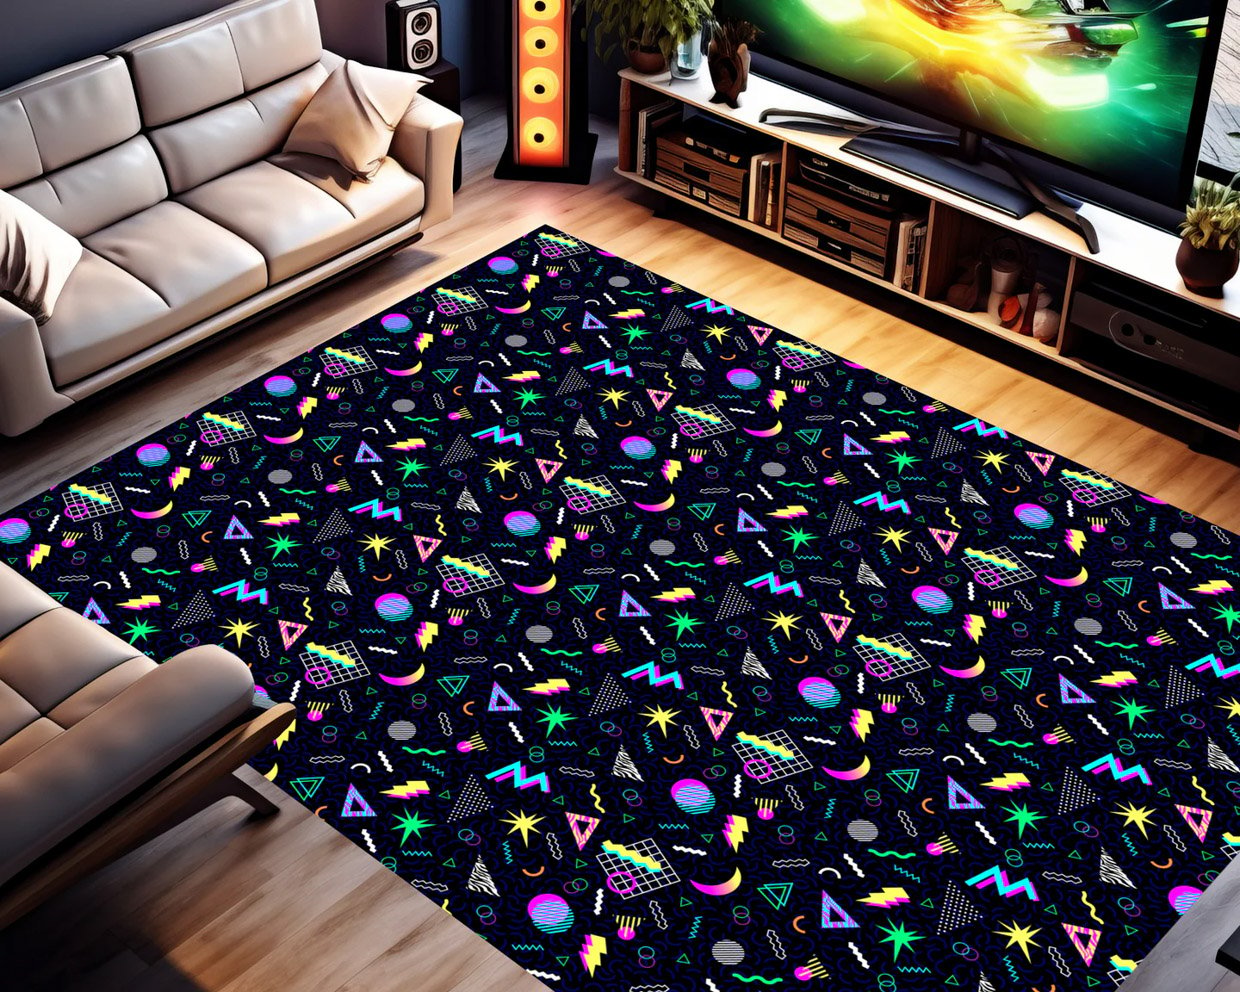 Retro Game Room Carpets